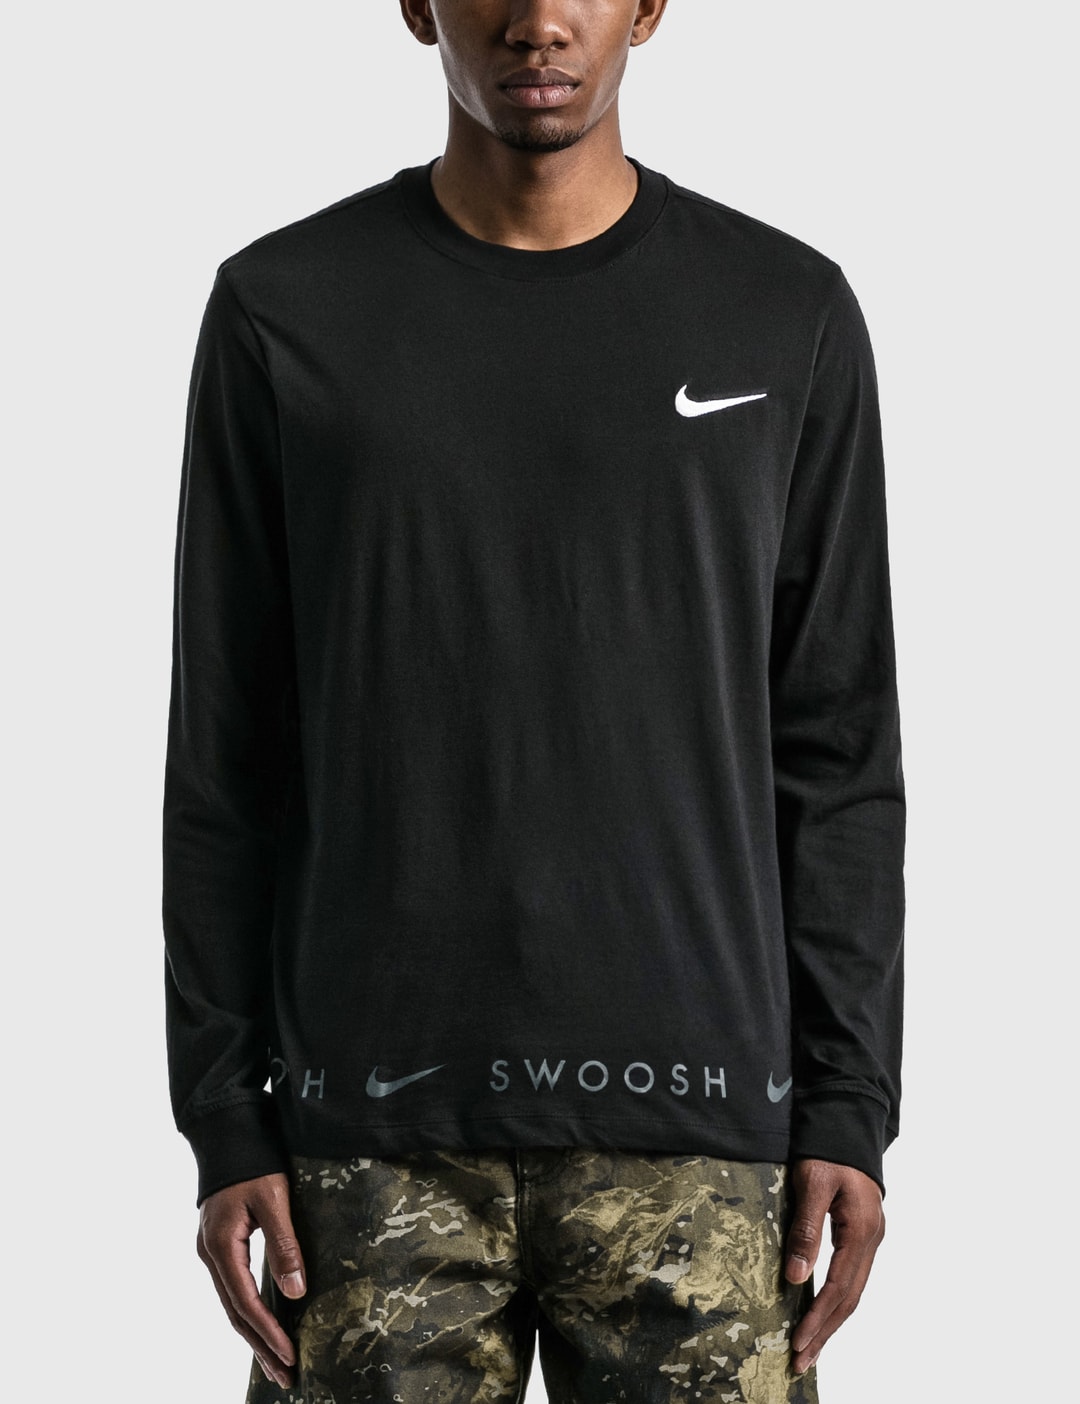 Nike - Nike Sportswear Swoosh Long T-shirt HBX - Globally Fashion Lifestyle by Hypebeast